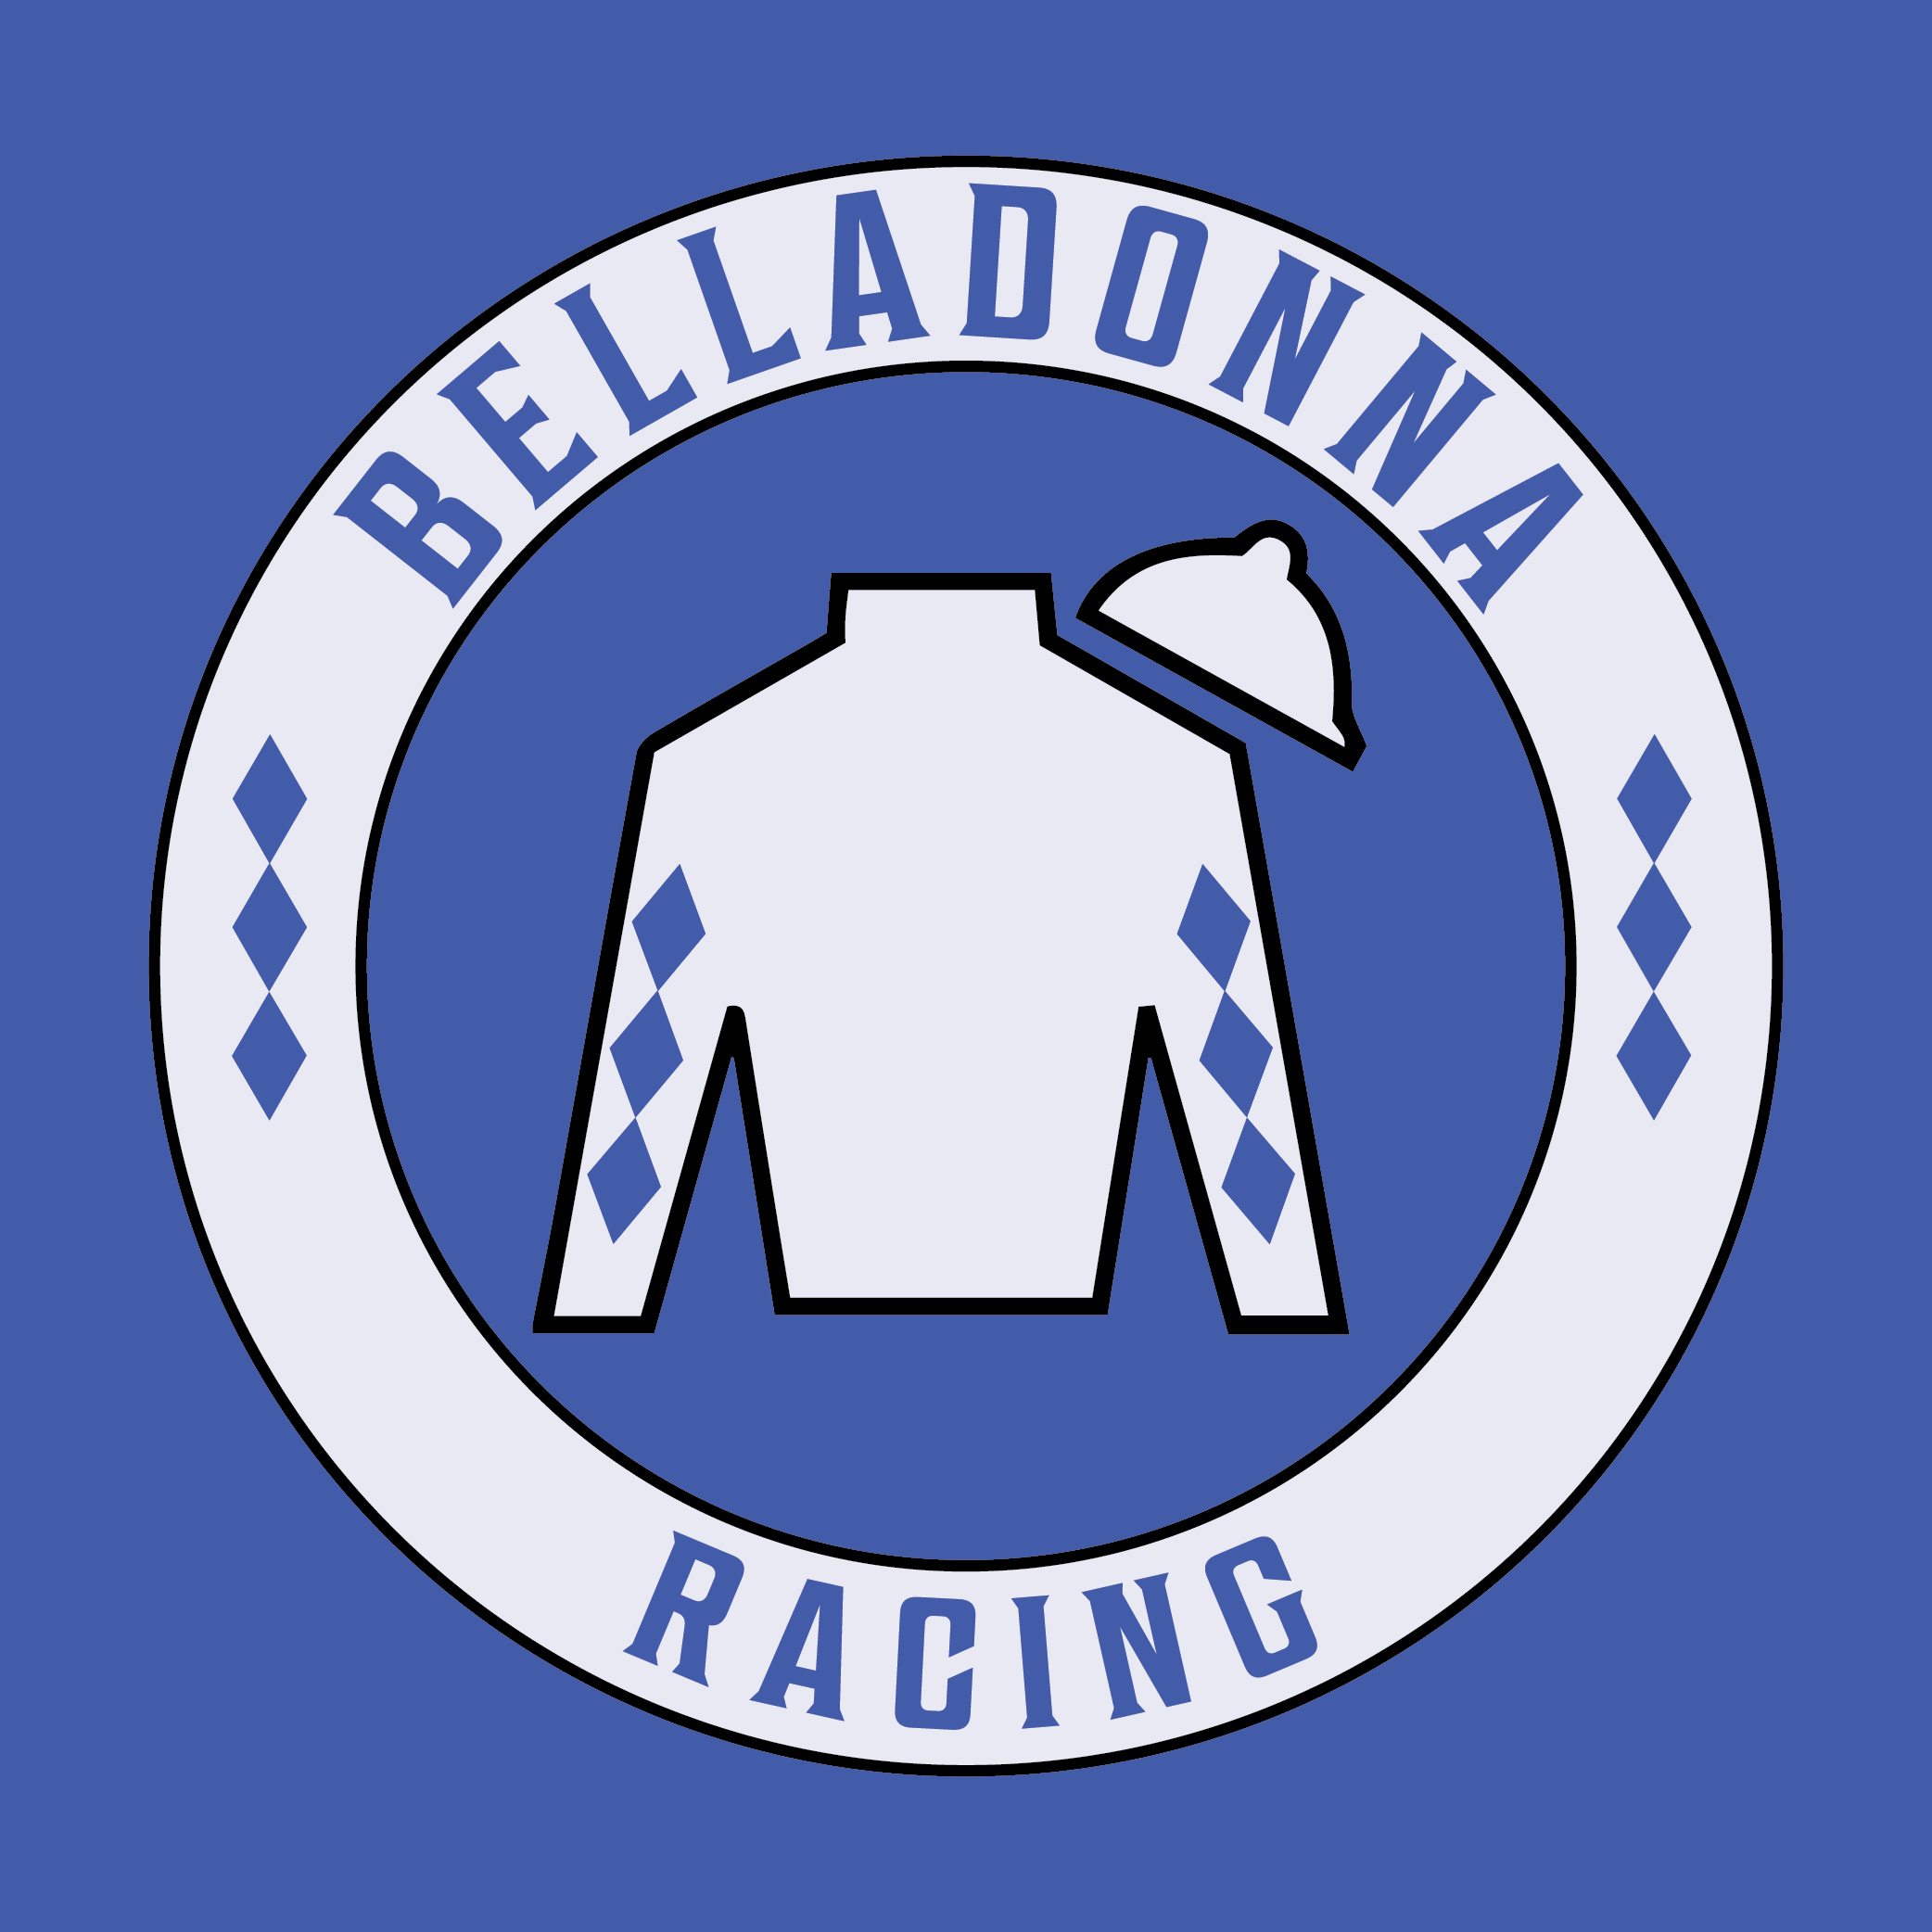 Belladonna Racing